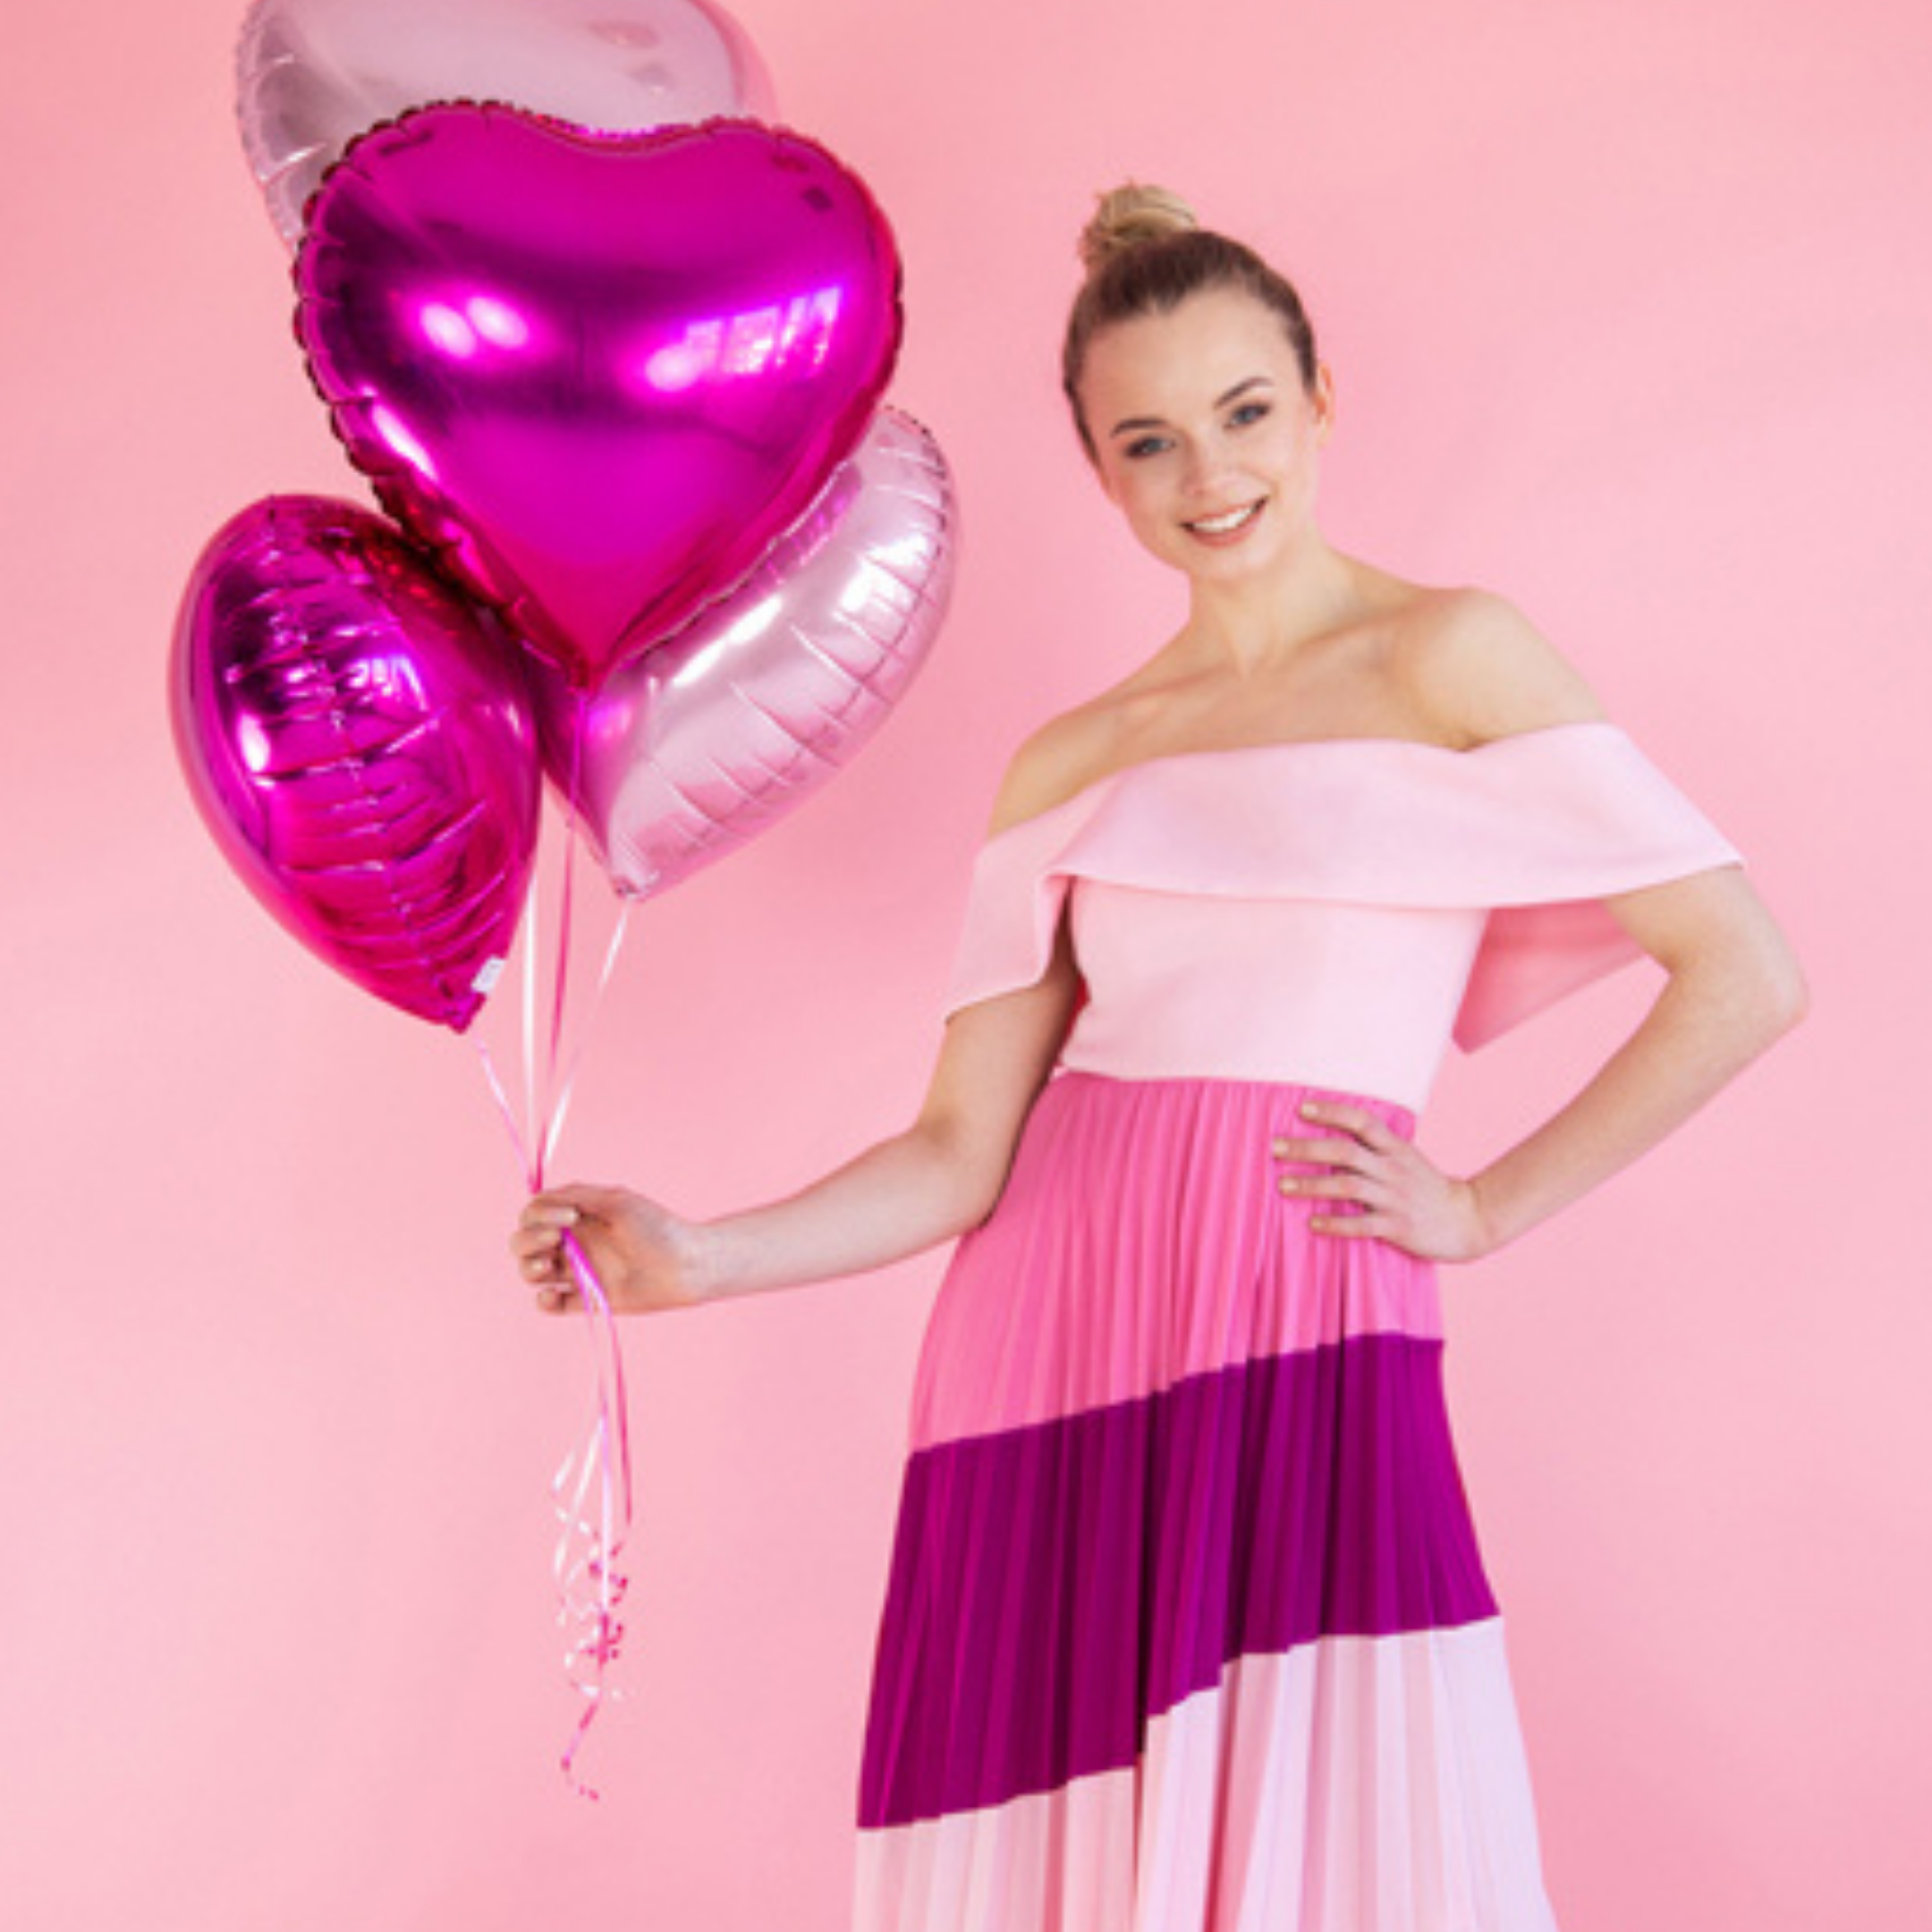 Balon folija - Srček, magenta pink 45 cm